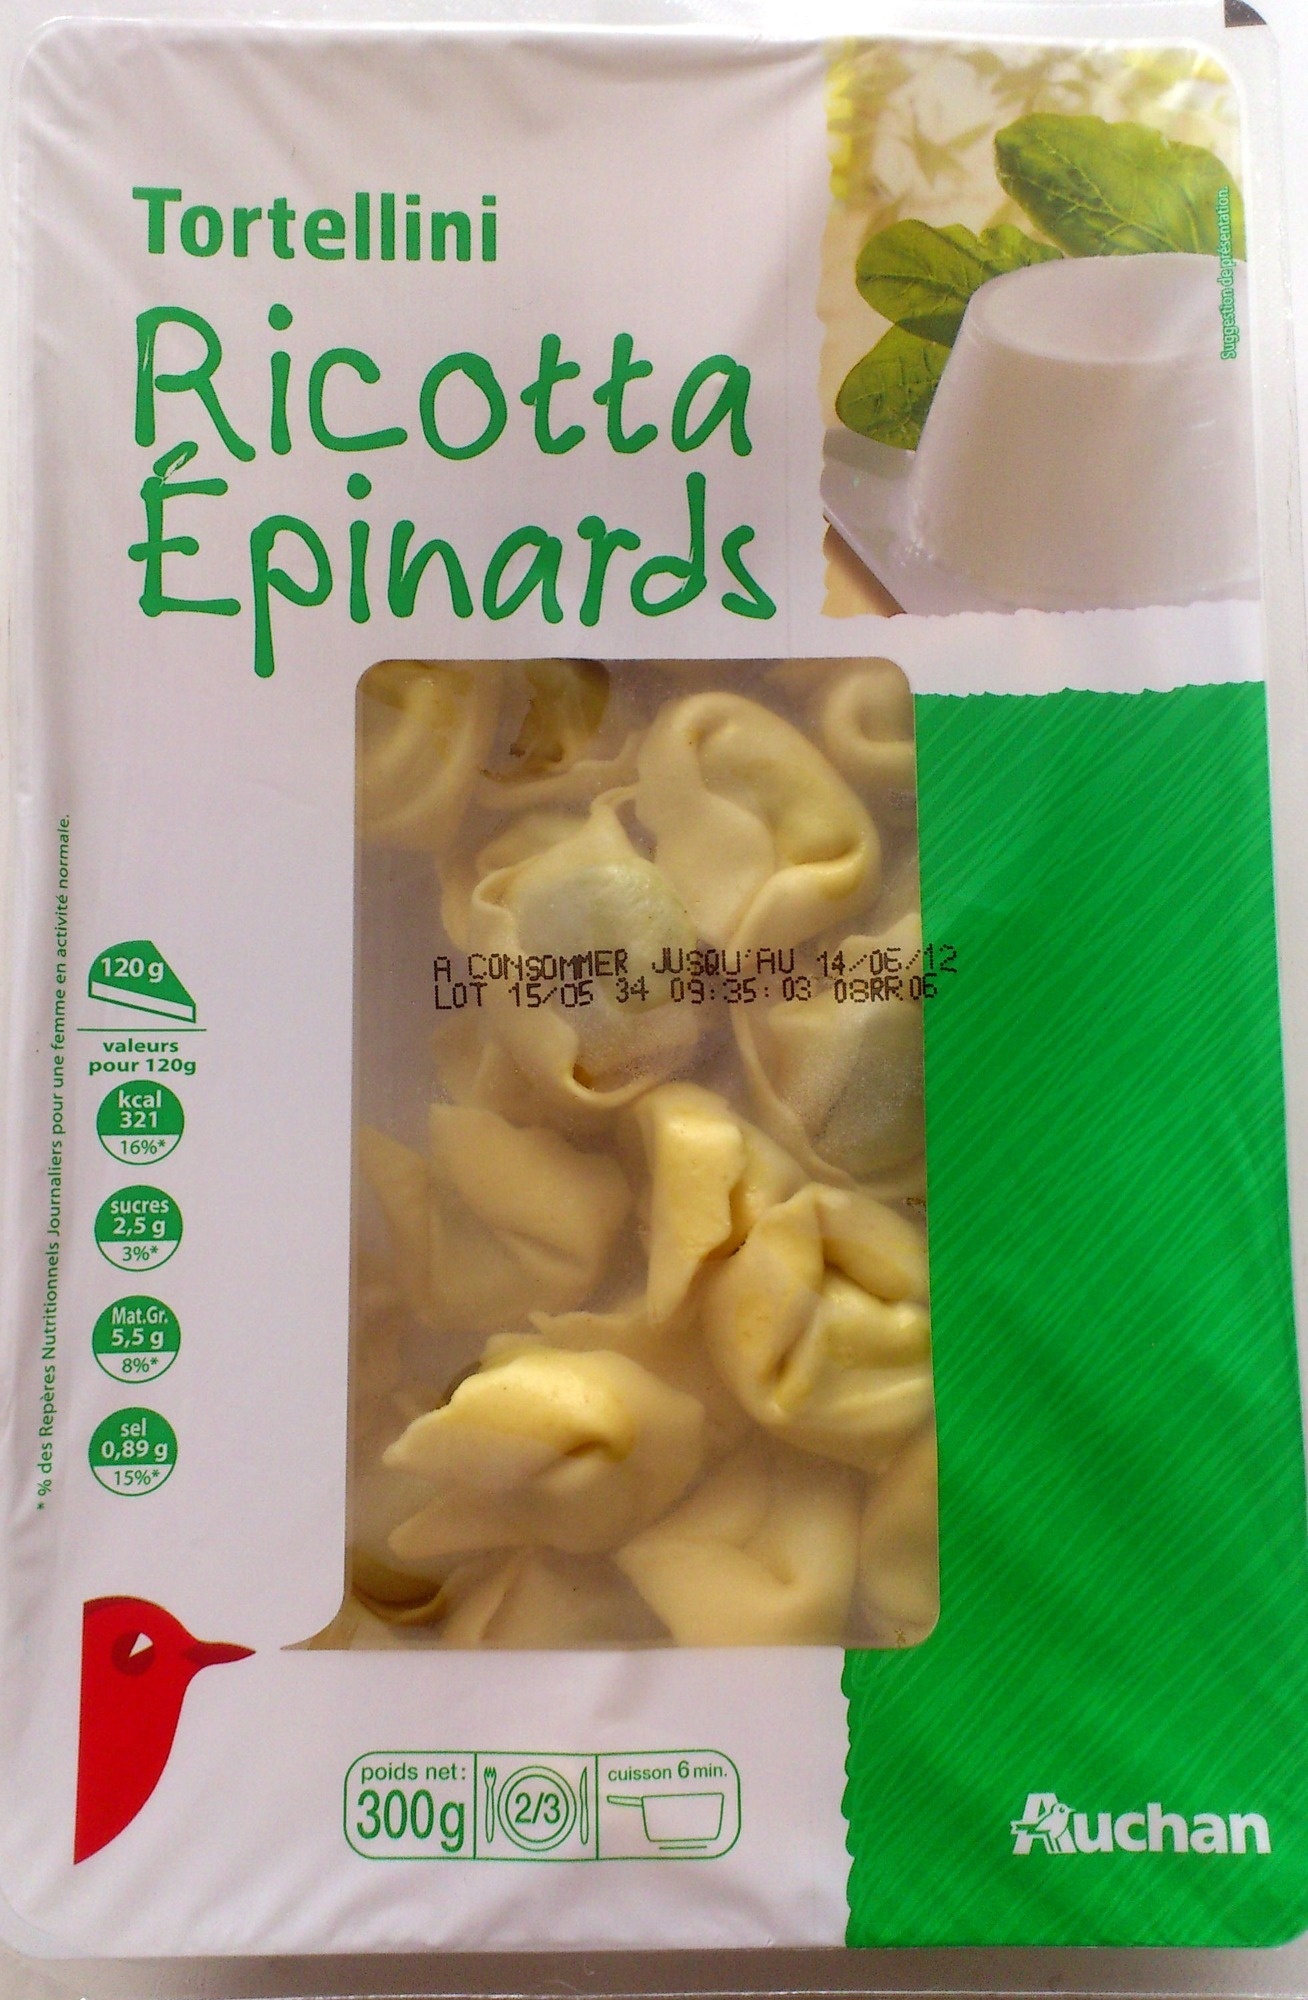 Tortellini Ricotta Épinards - Product - fr